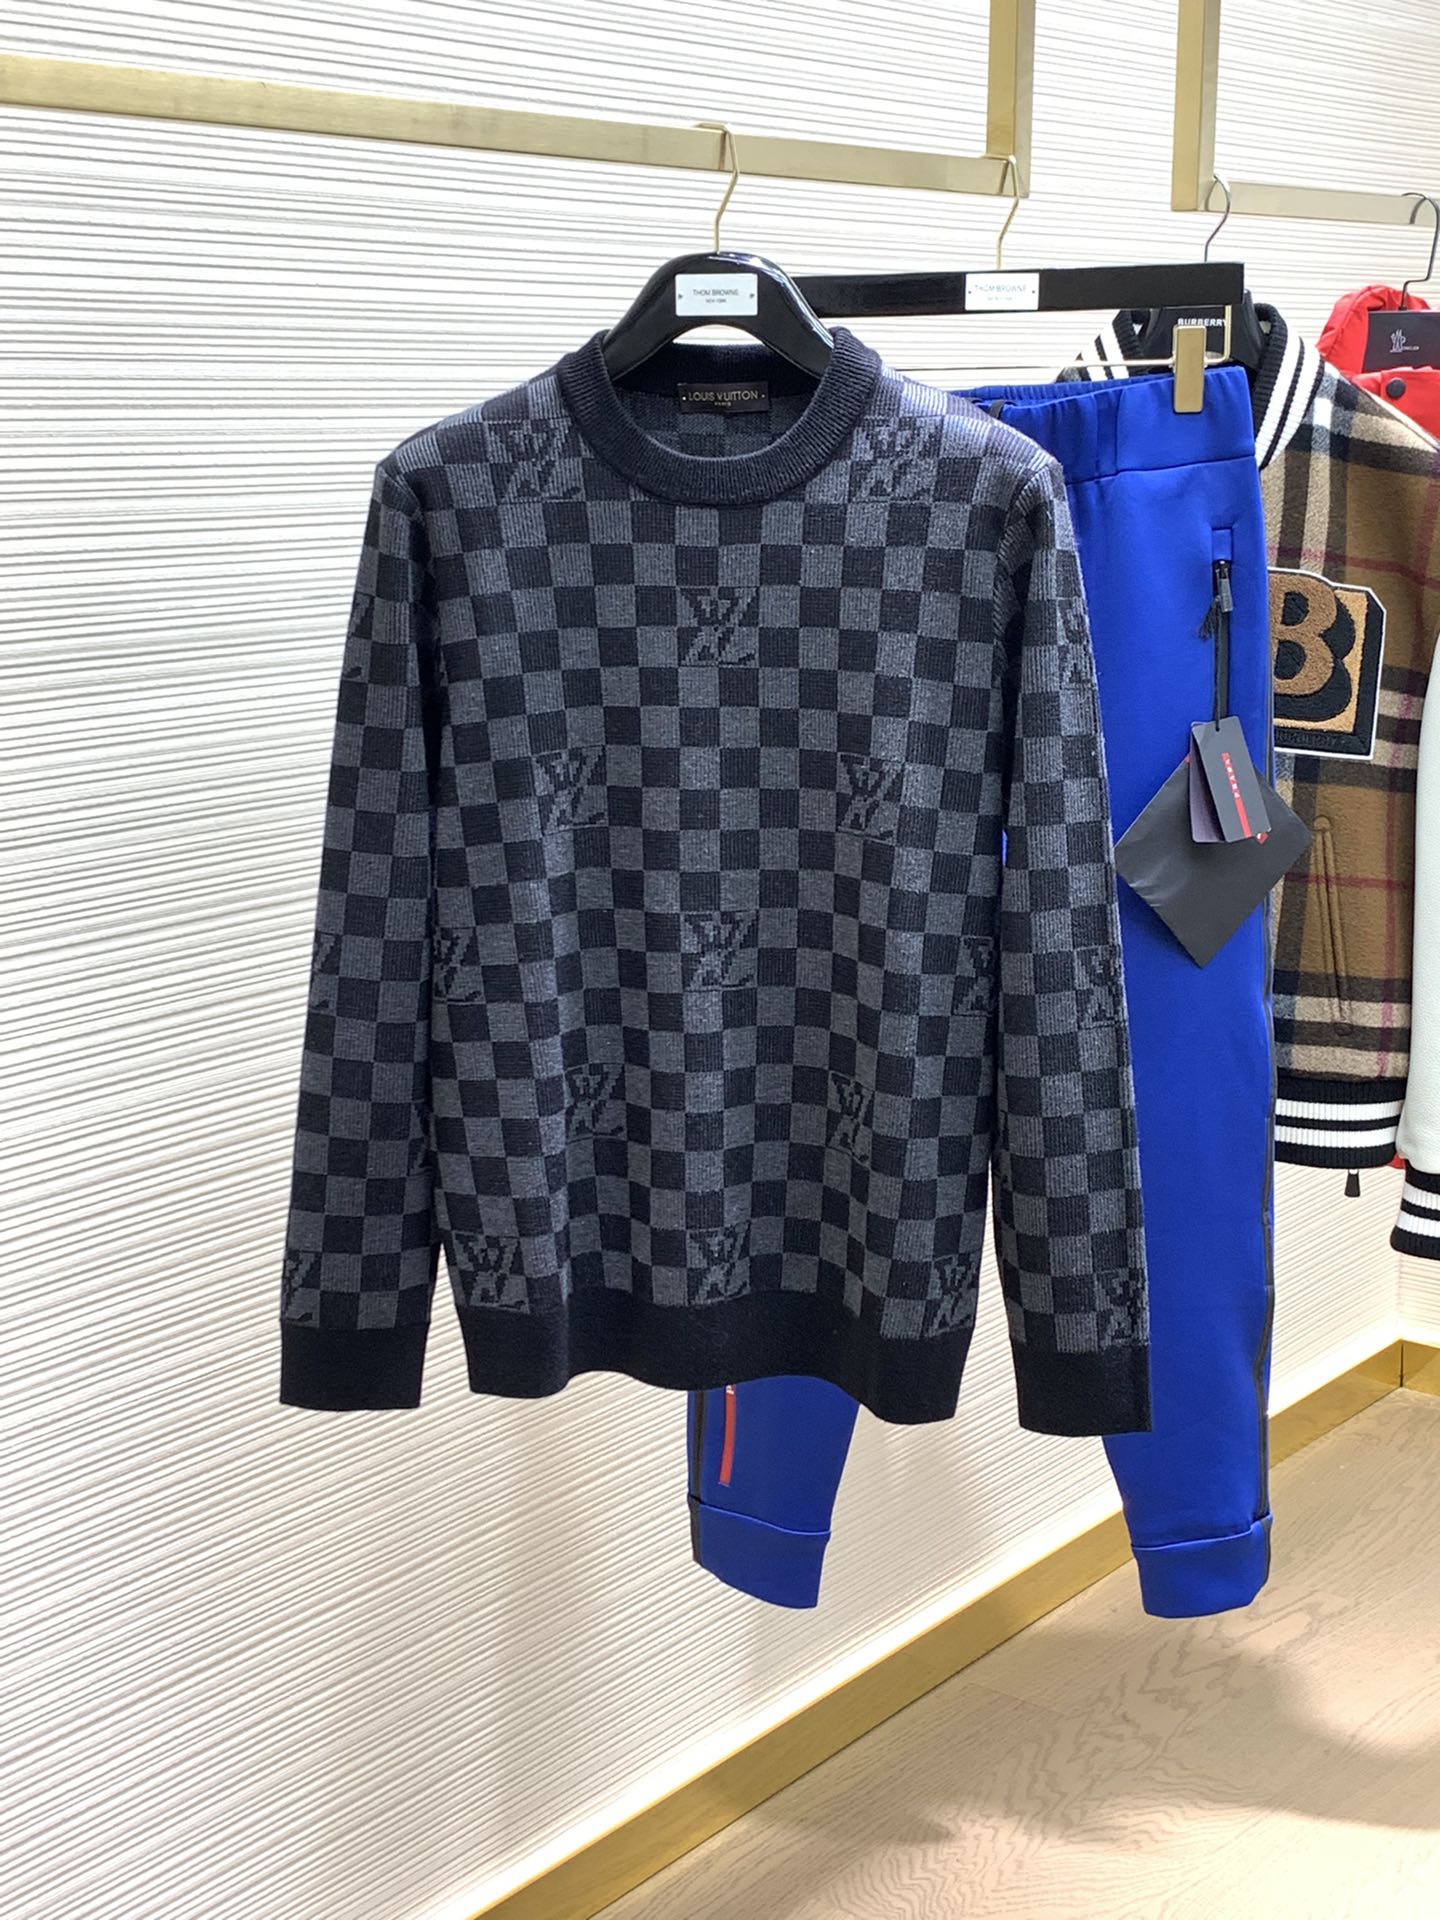 Louis Vuitton Clothing Knit Sweater Sweatshirts Knitting Fall/Winter Collection Fashion Casual